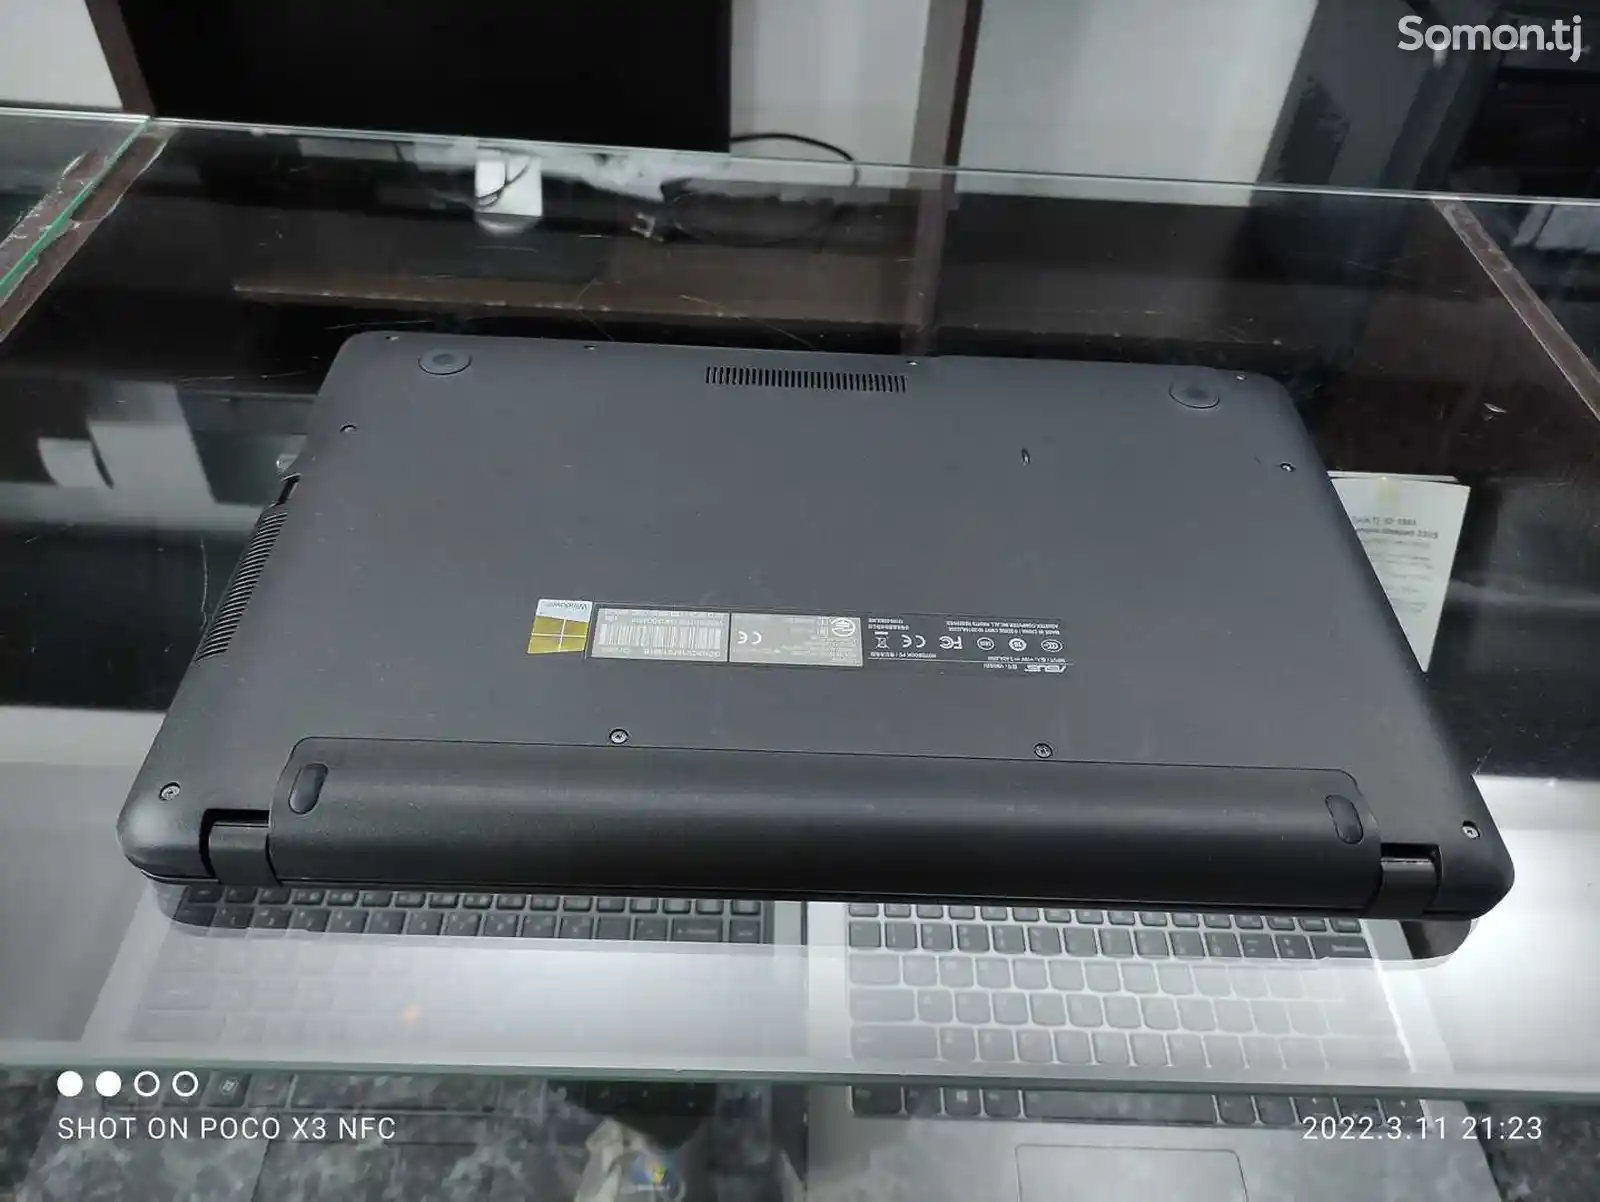 Игровой ноутбук Asus X541UJ Core i7-7500U 2.9GHz 8gb/256gb SSD 7TH GEN-8